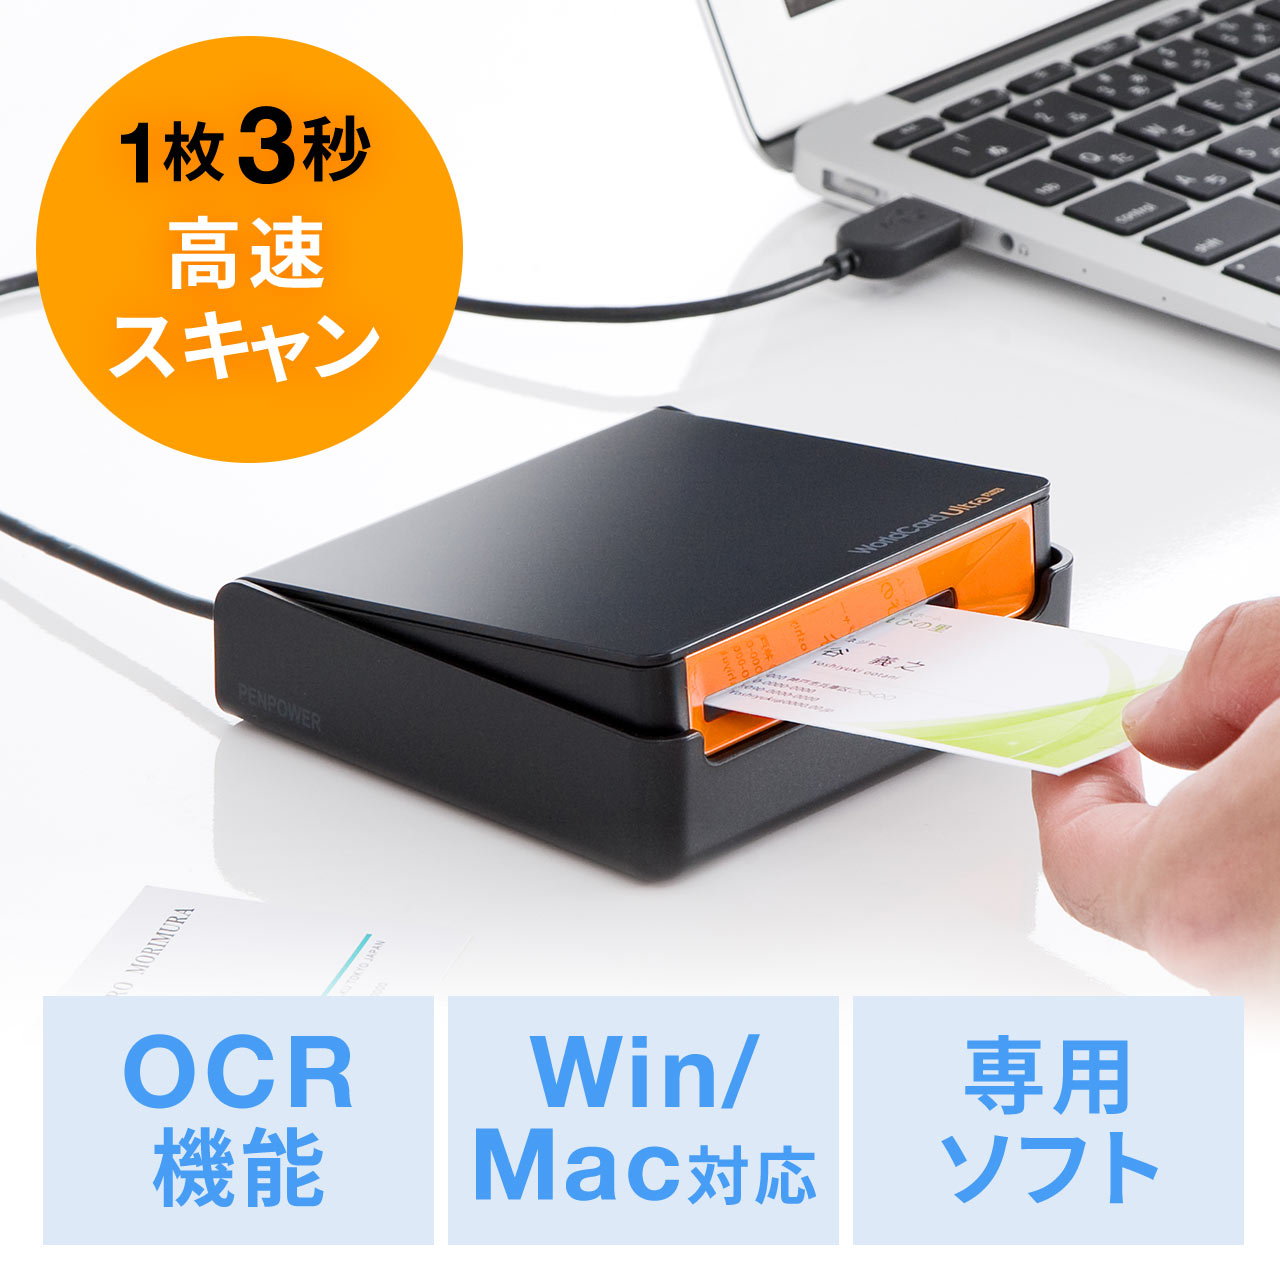 USB名刺管理スキャナ 1枚3秒連続スキャン OCR搭載 Win Mac対応 Worldcard Ultra Plus 400-SCN005N  |サンワダイレクト